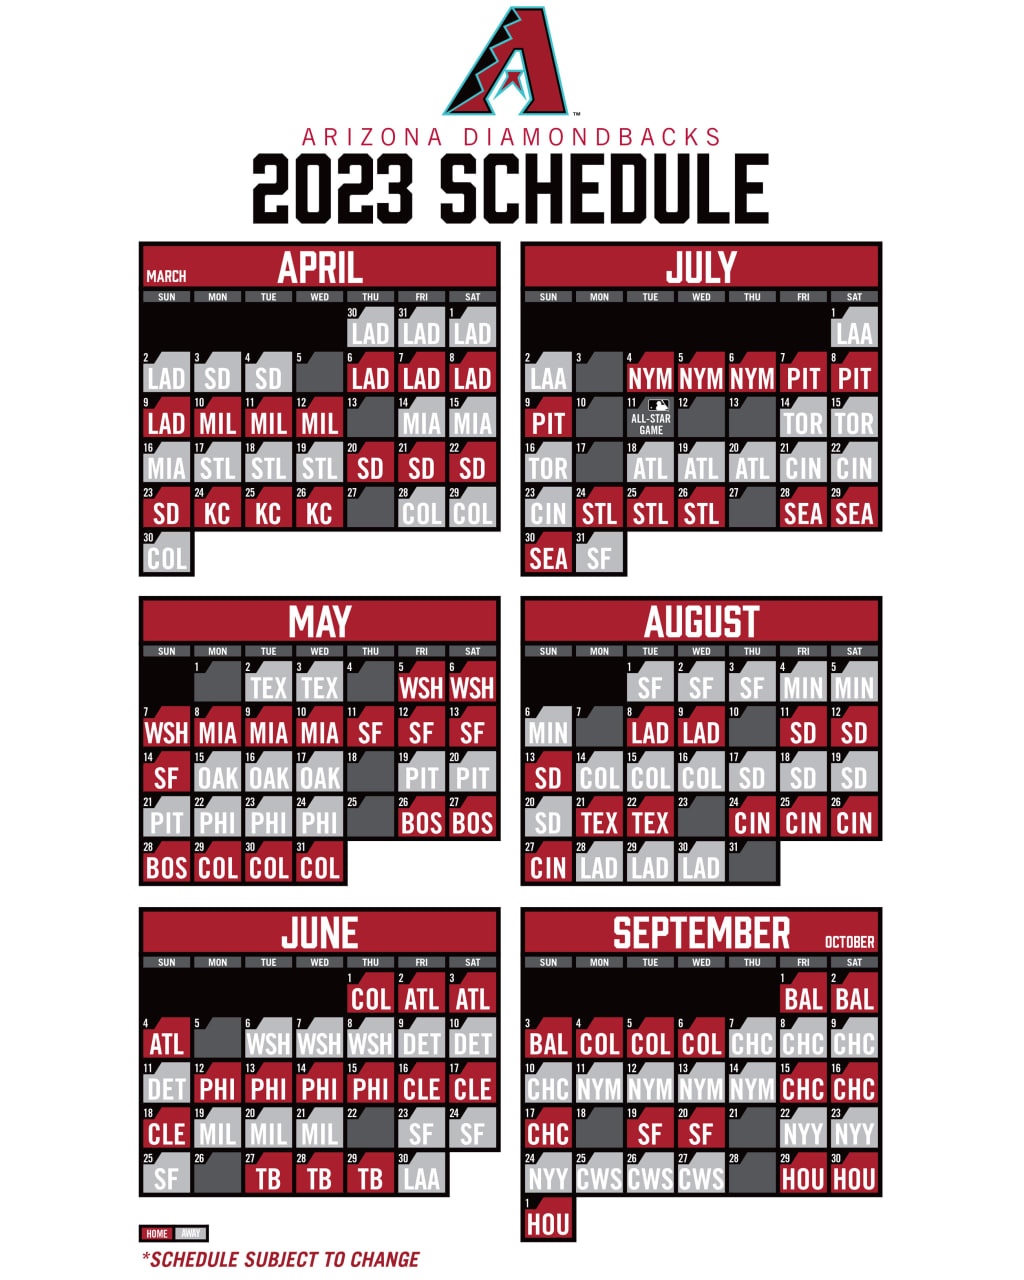 Arizona Diamondbacks release 2022 spring training schedule